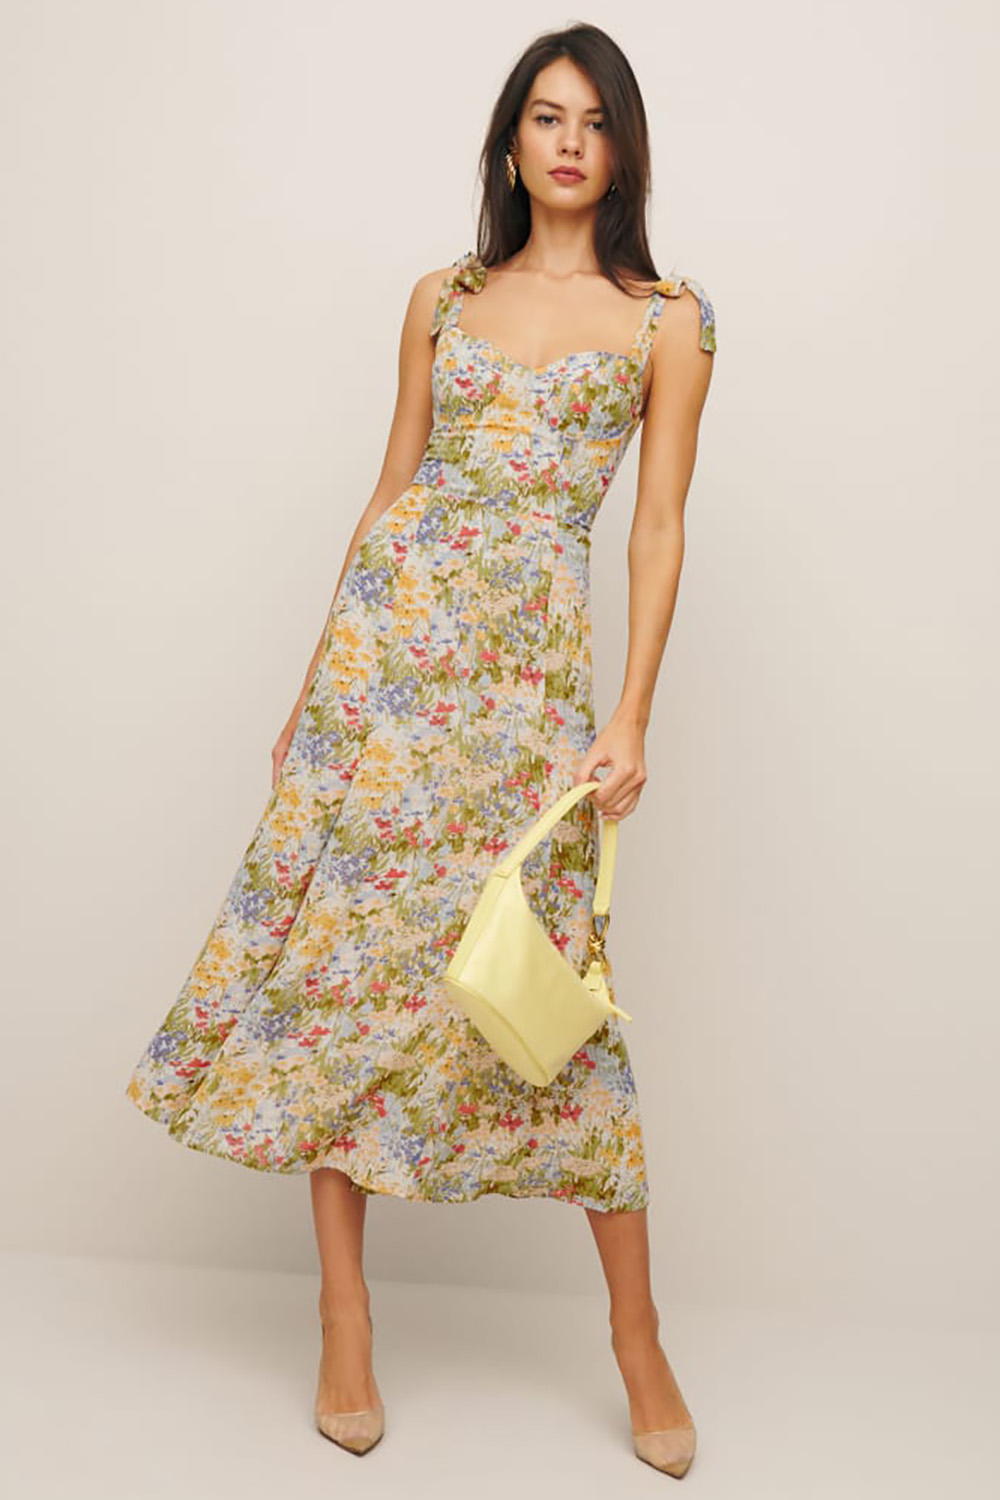 Romantic Date Light Yellow Ditsy Print Sleeveless Lace Up Midi Dress